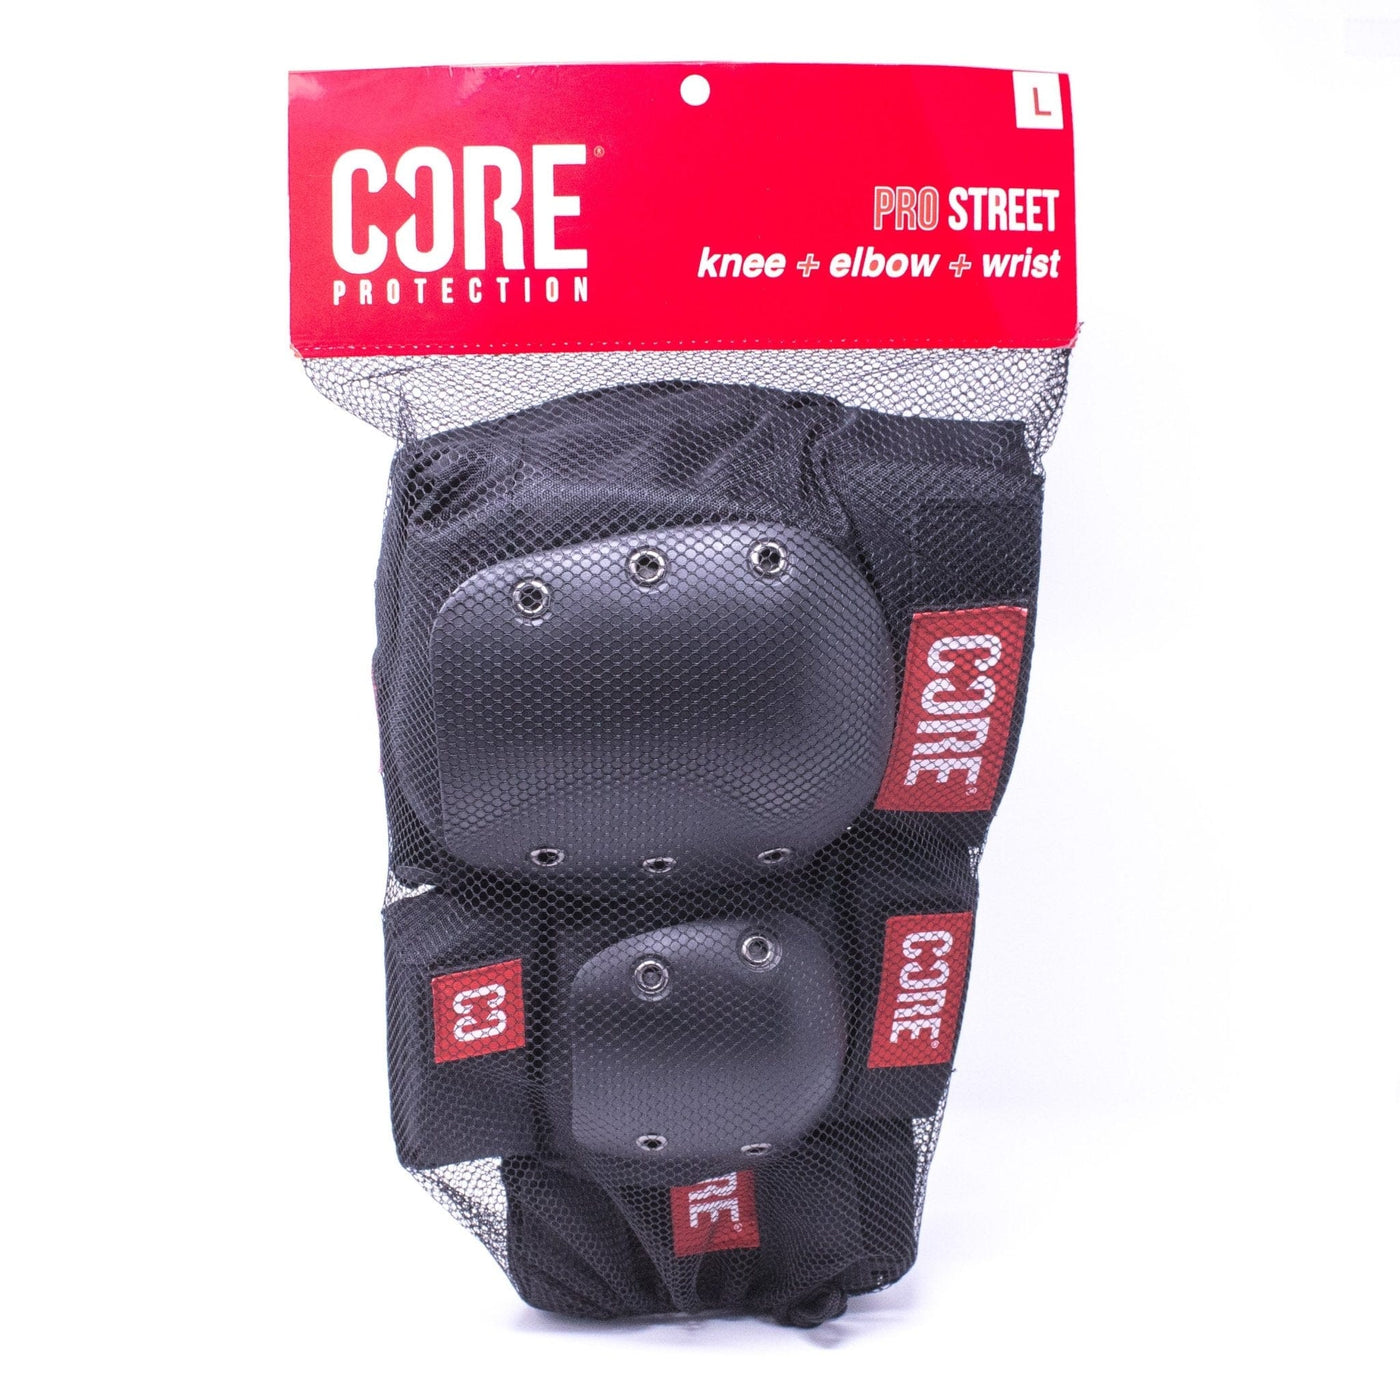 CORE Protection Triple Pro Street Pad Set (Knee/Elbow/Wrist) I Skateboard Protective Gear 